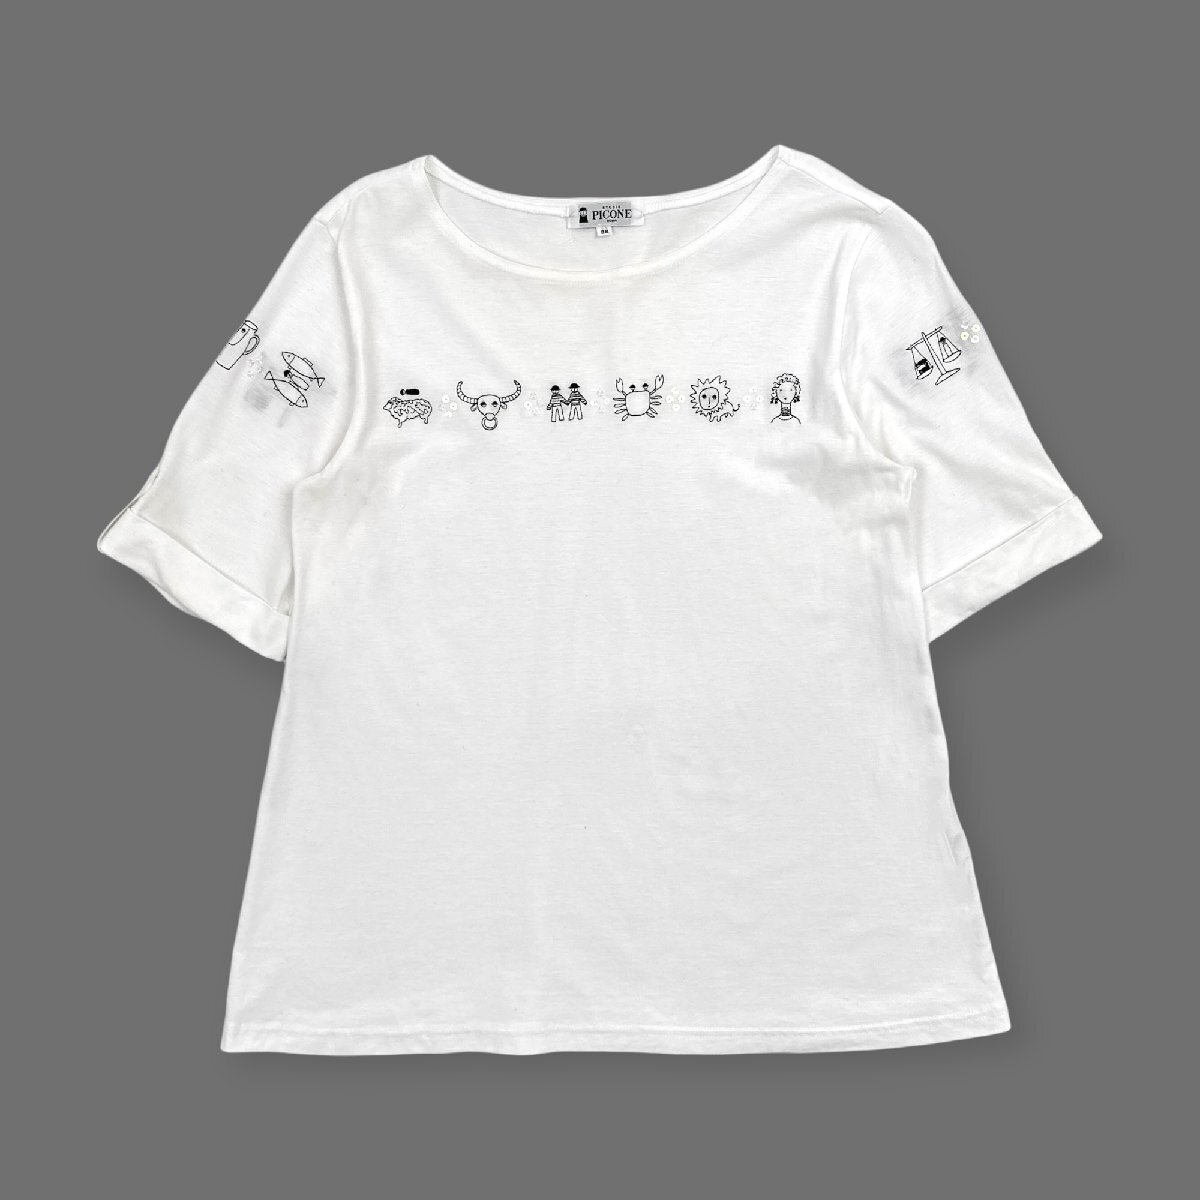 PICONE ピッコーネ ビーズ 刺繍 星座 デザイン 半袖Tシャツ カットソー サイズ 38 /白 ホワイト/レディース/日本製の画像1